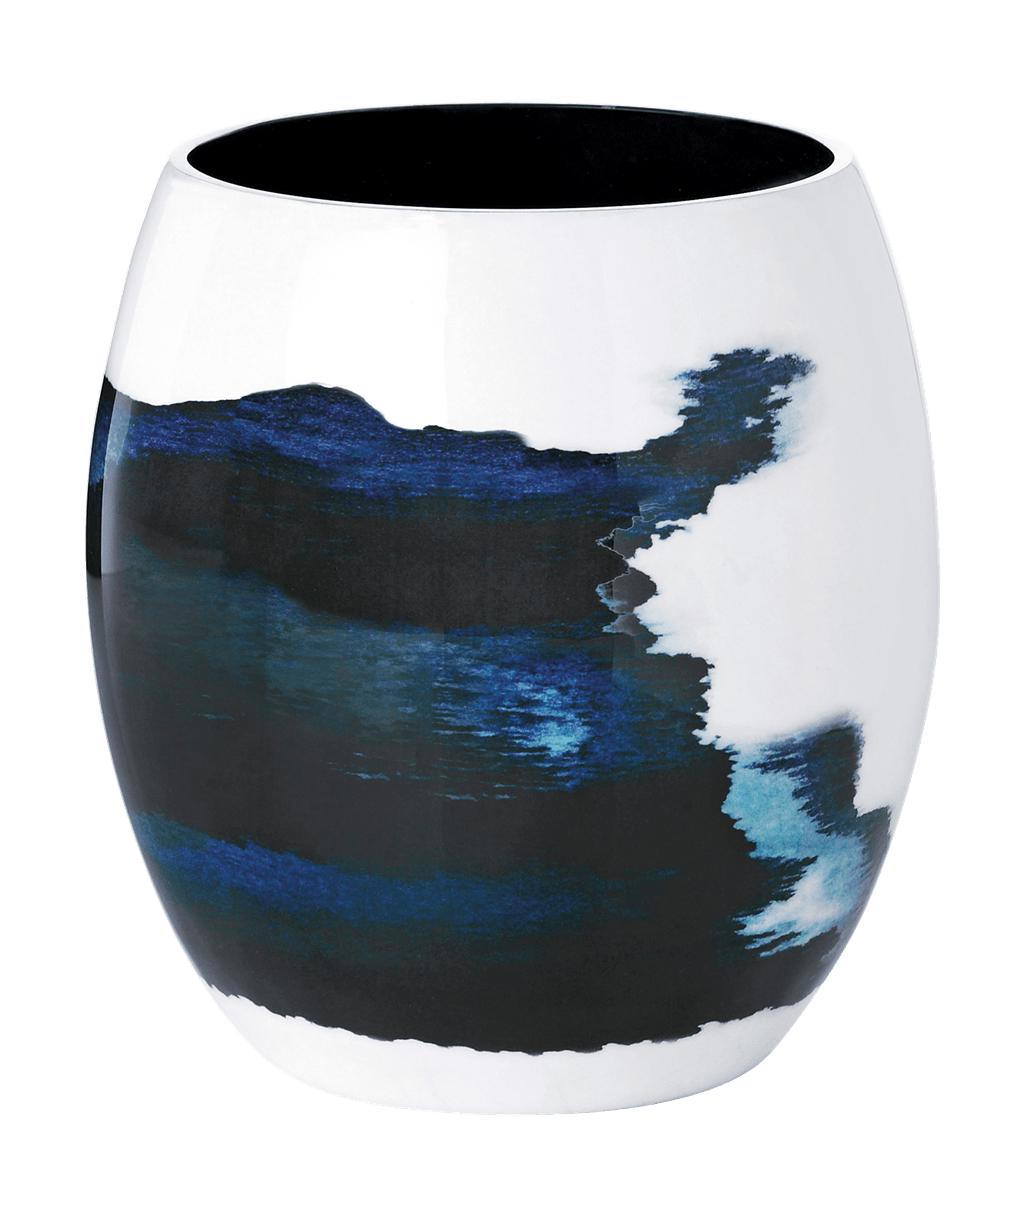 Stelton Stockholm Vase 15,7 Cm, Aquatisch